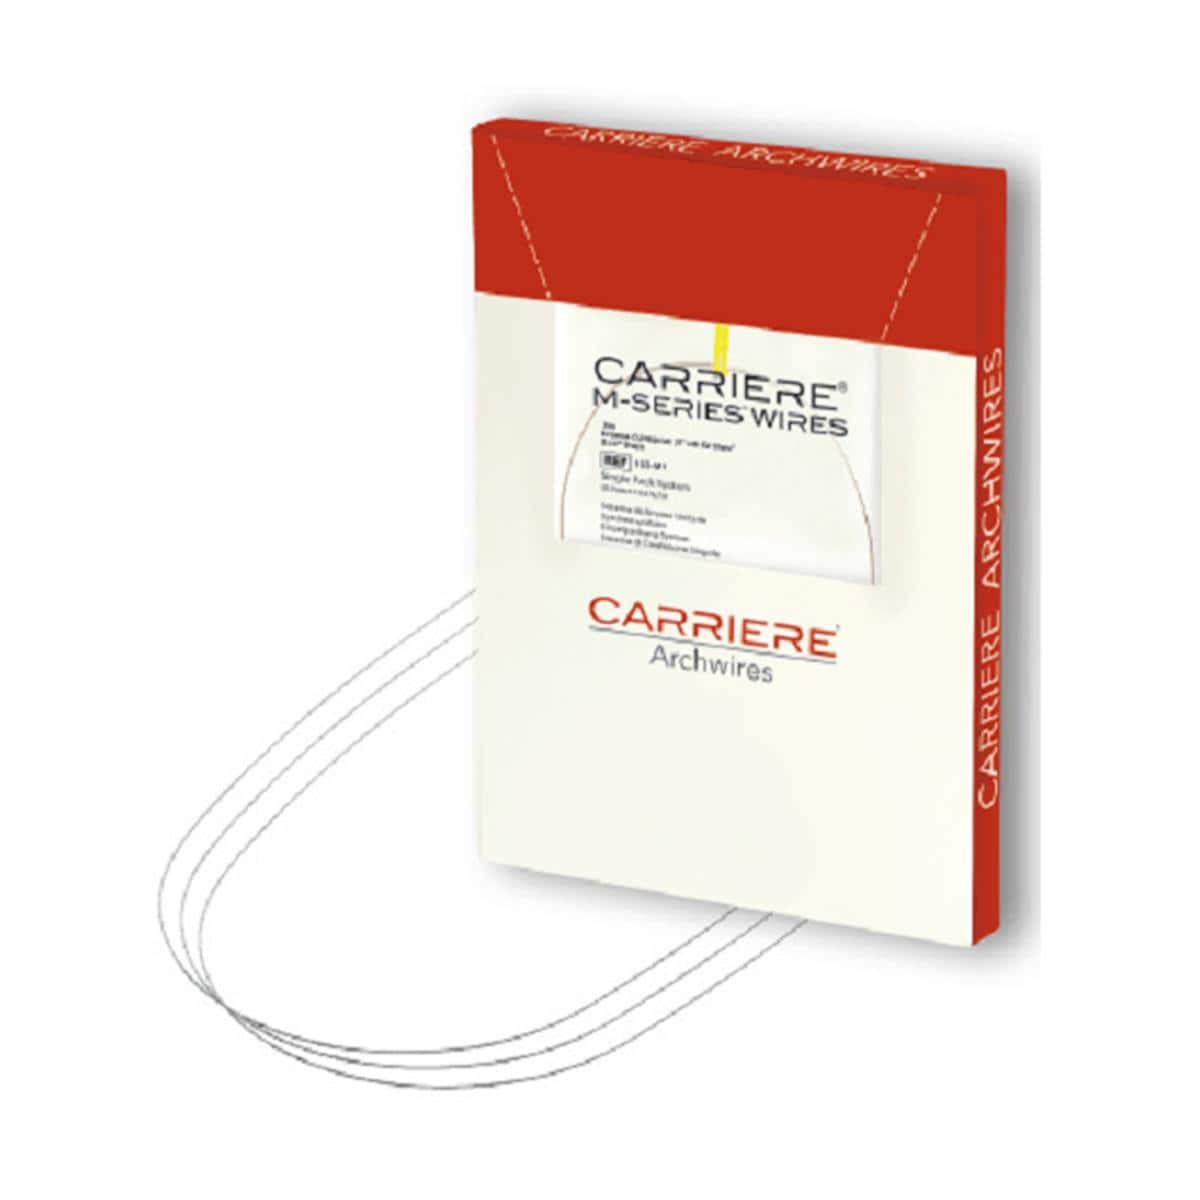 CARRIERE M-Series Wire M-TWO - .020 x .020 CU NiTanium 35  - 103-M2, 10 stuks